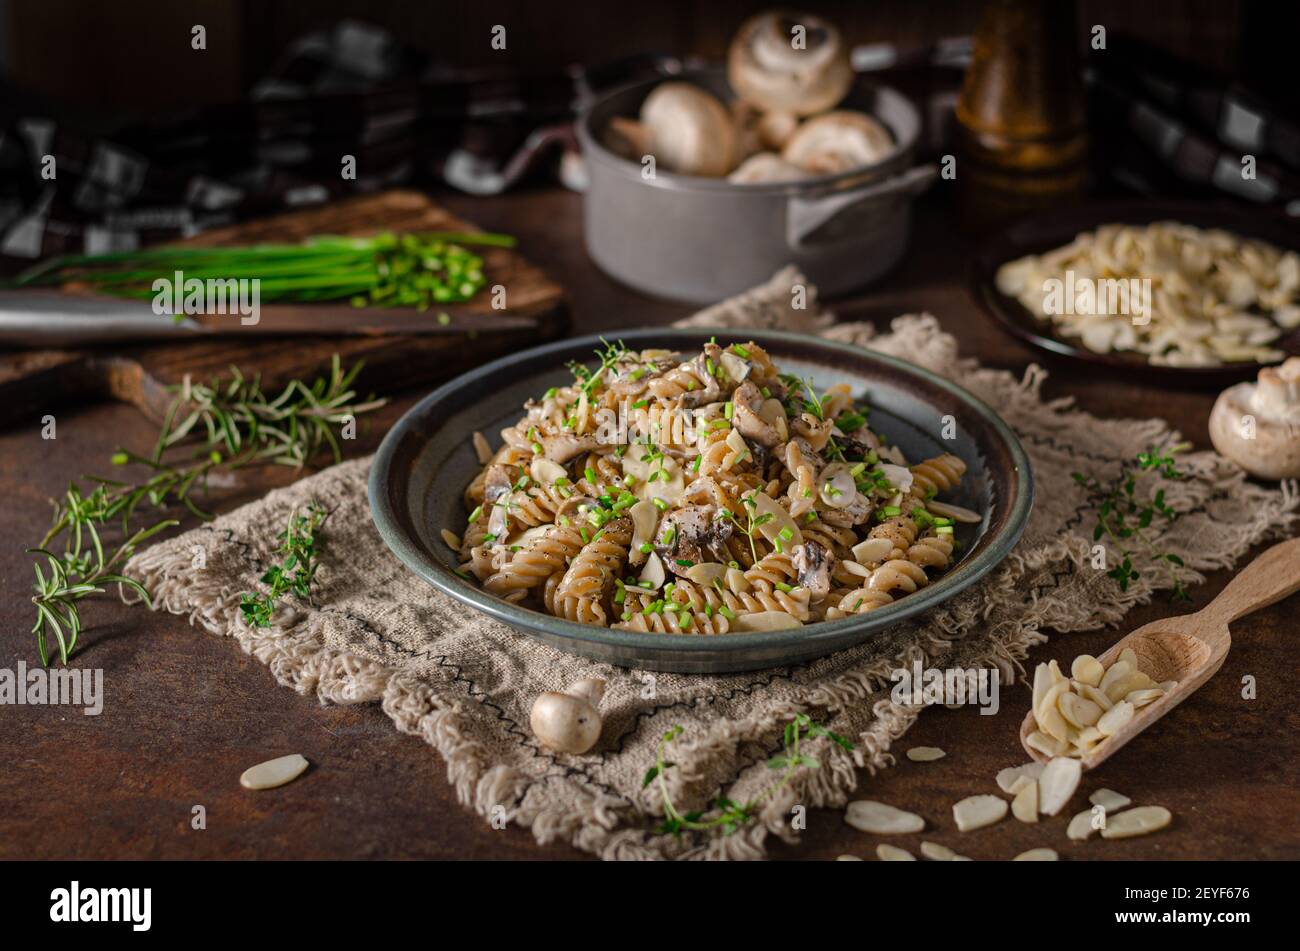 Original creamy pasta with mushrooms, herbs and almond slices Stock Photo